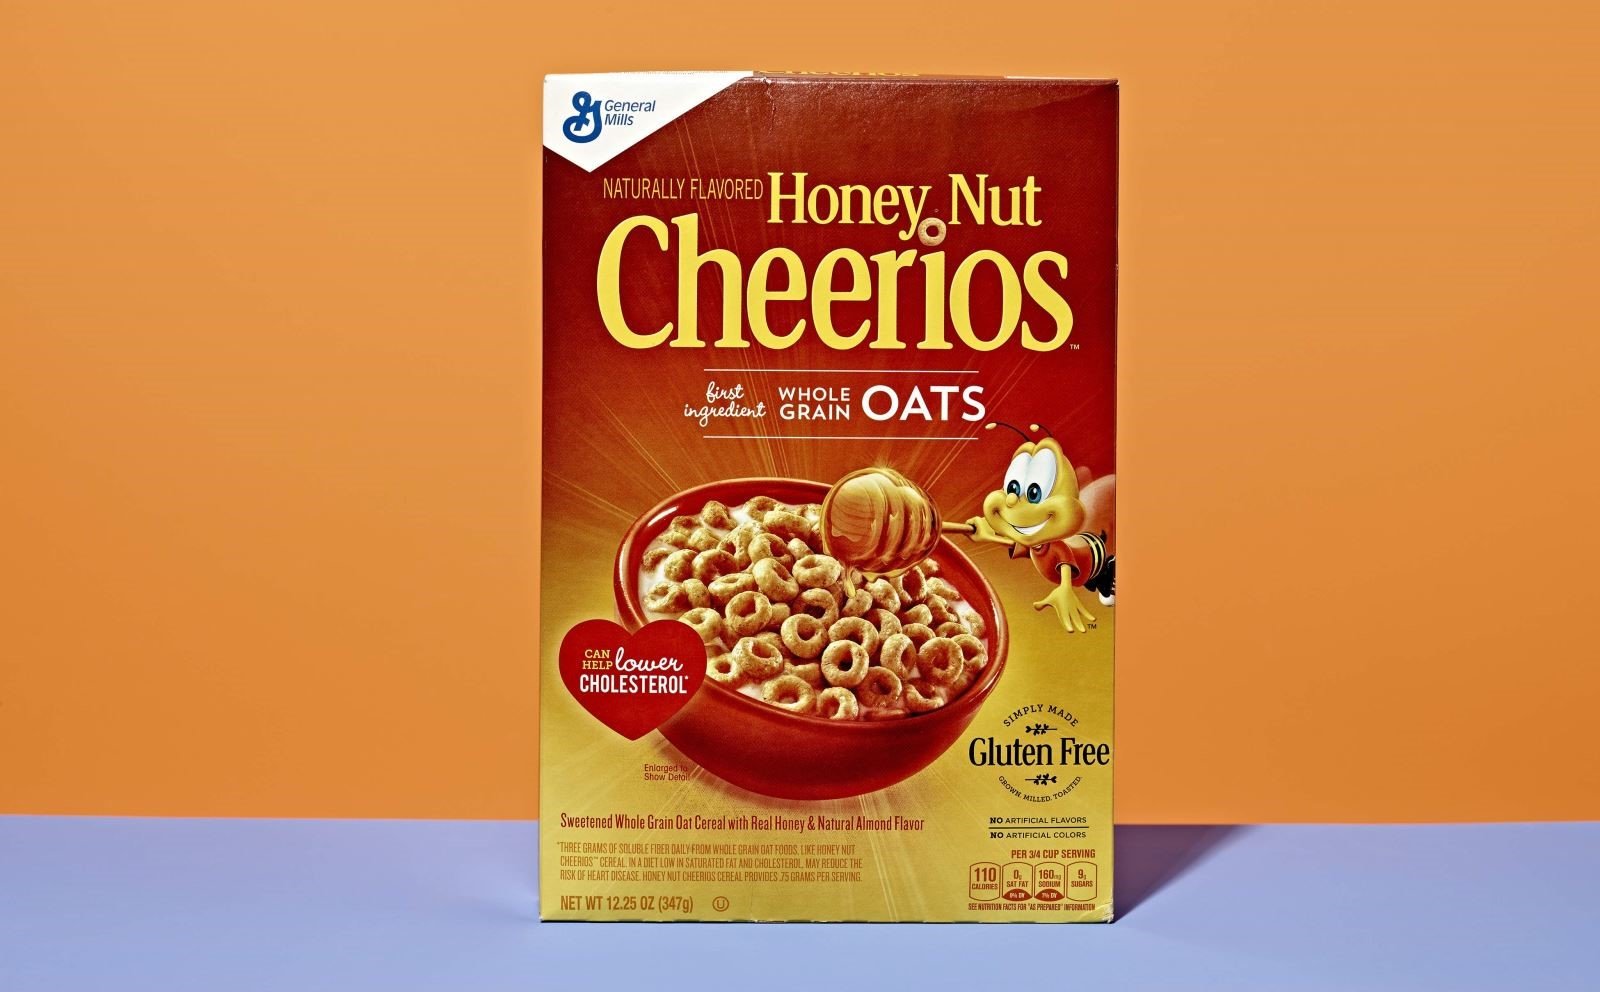 Cheerios Marketing Mix